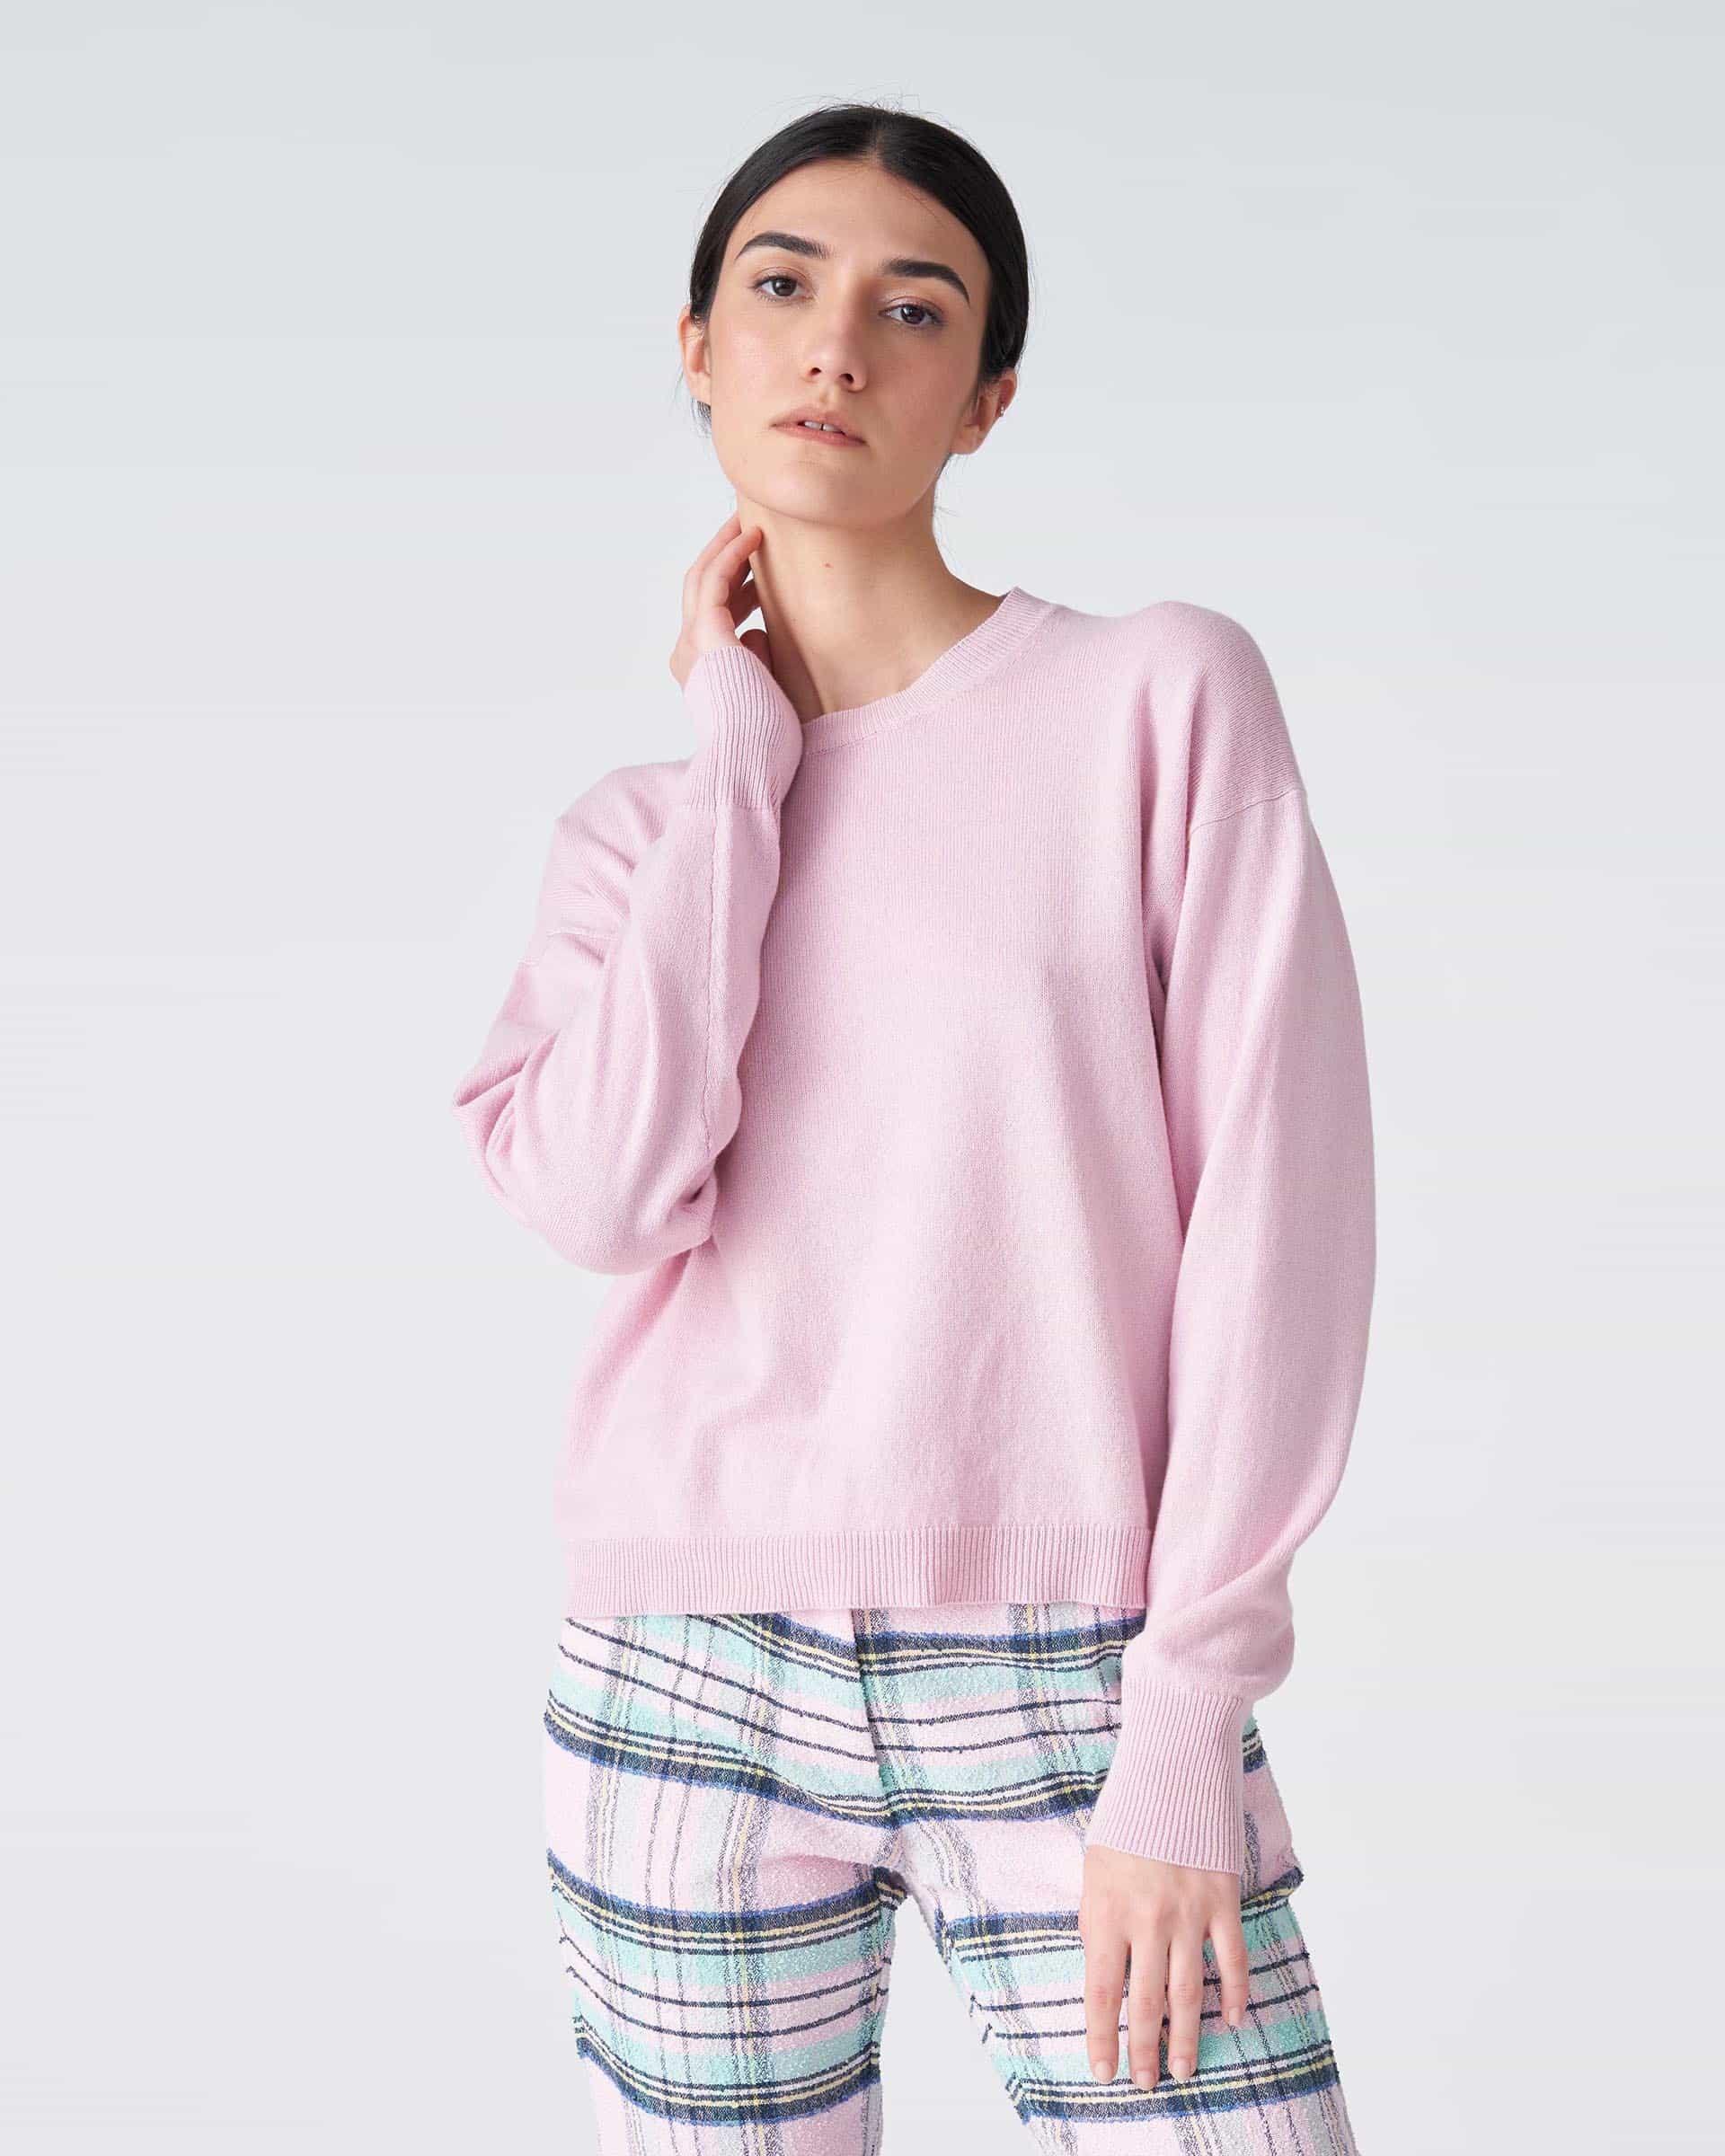 The Market Store | Pink Crewneck Sweater